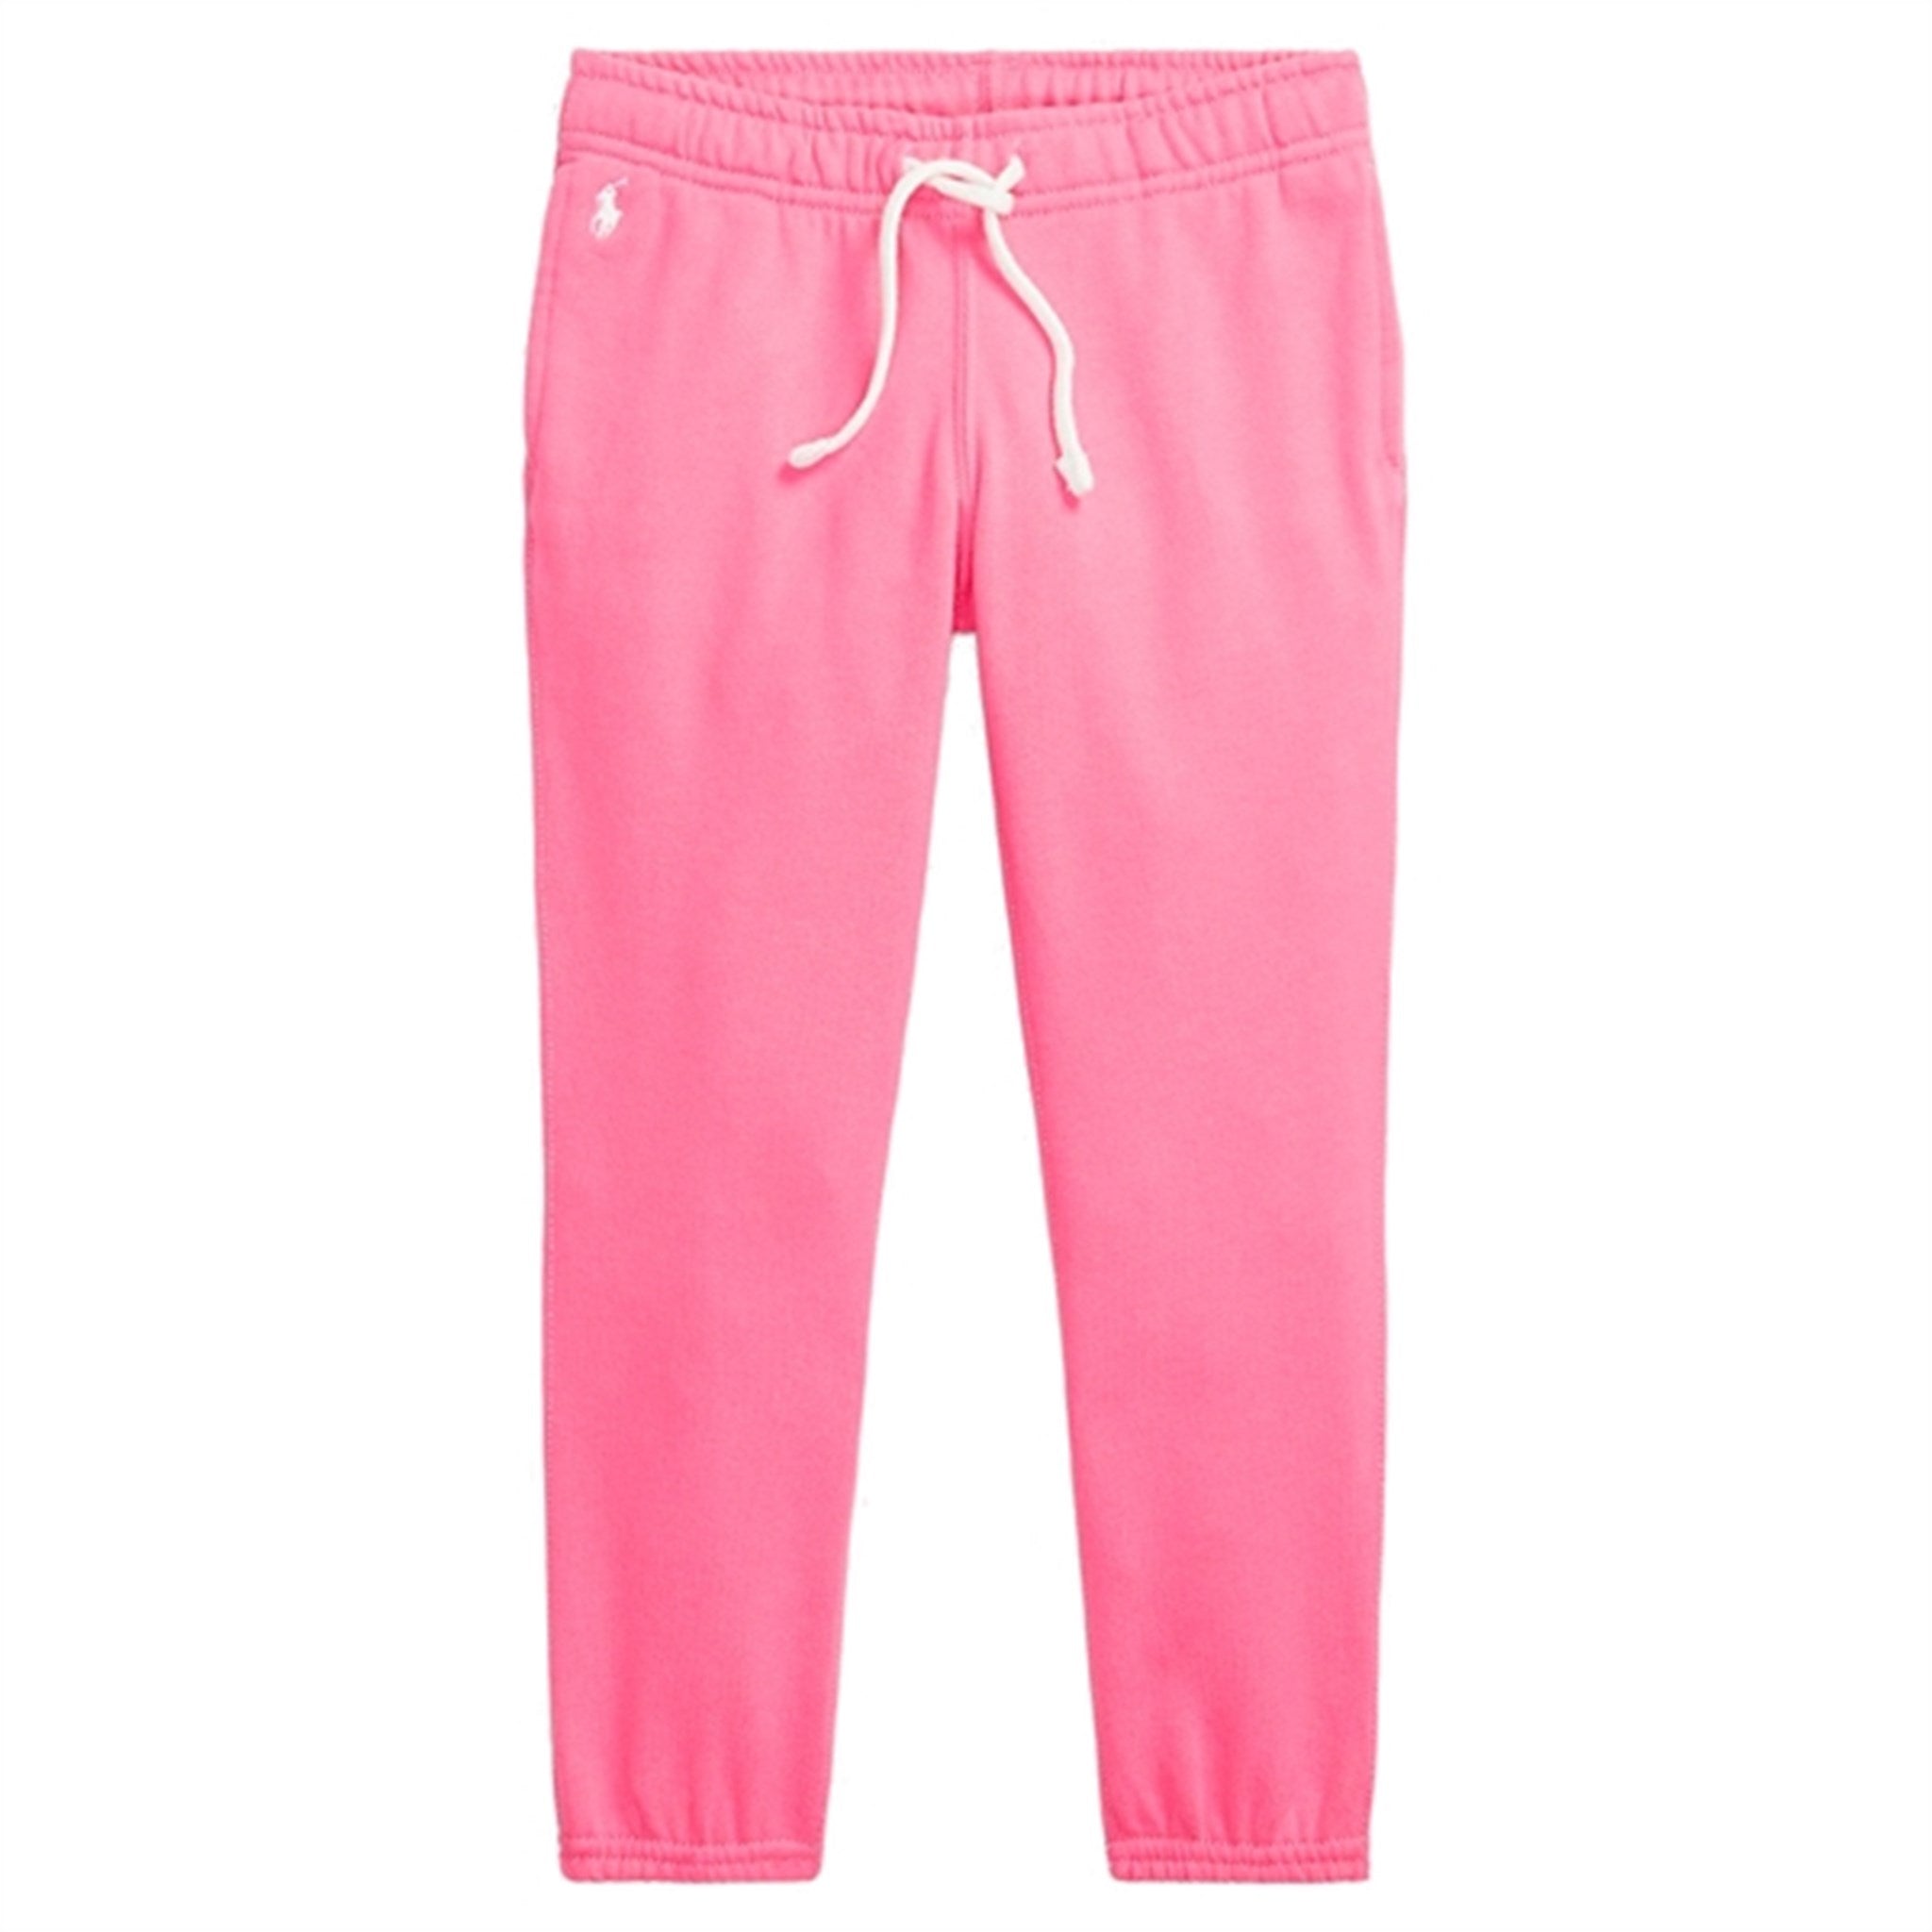 Polo Ralph Lauren Athletic Tights Carmel Pink 2